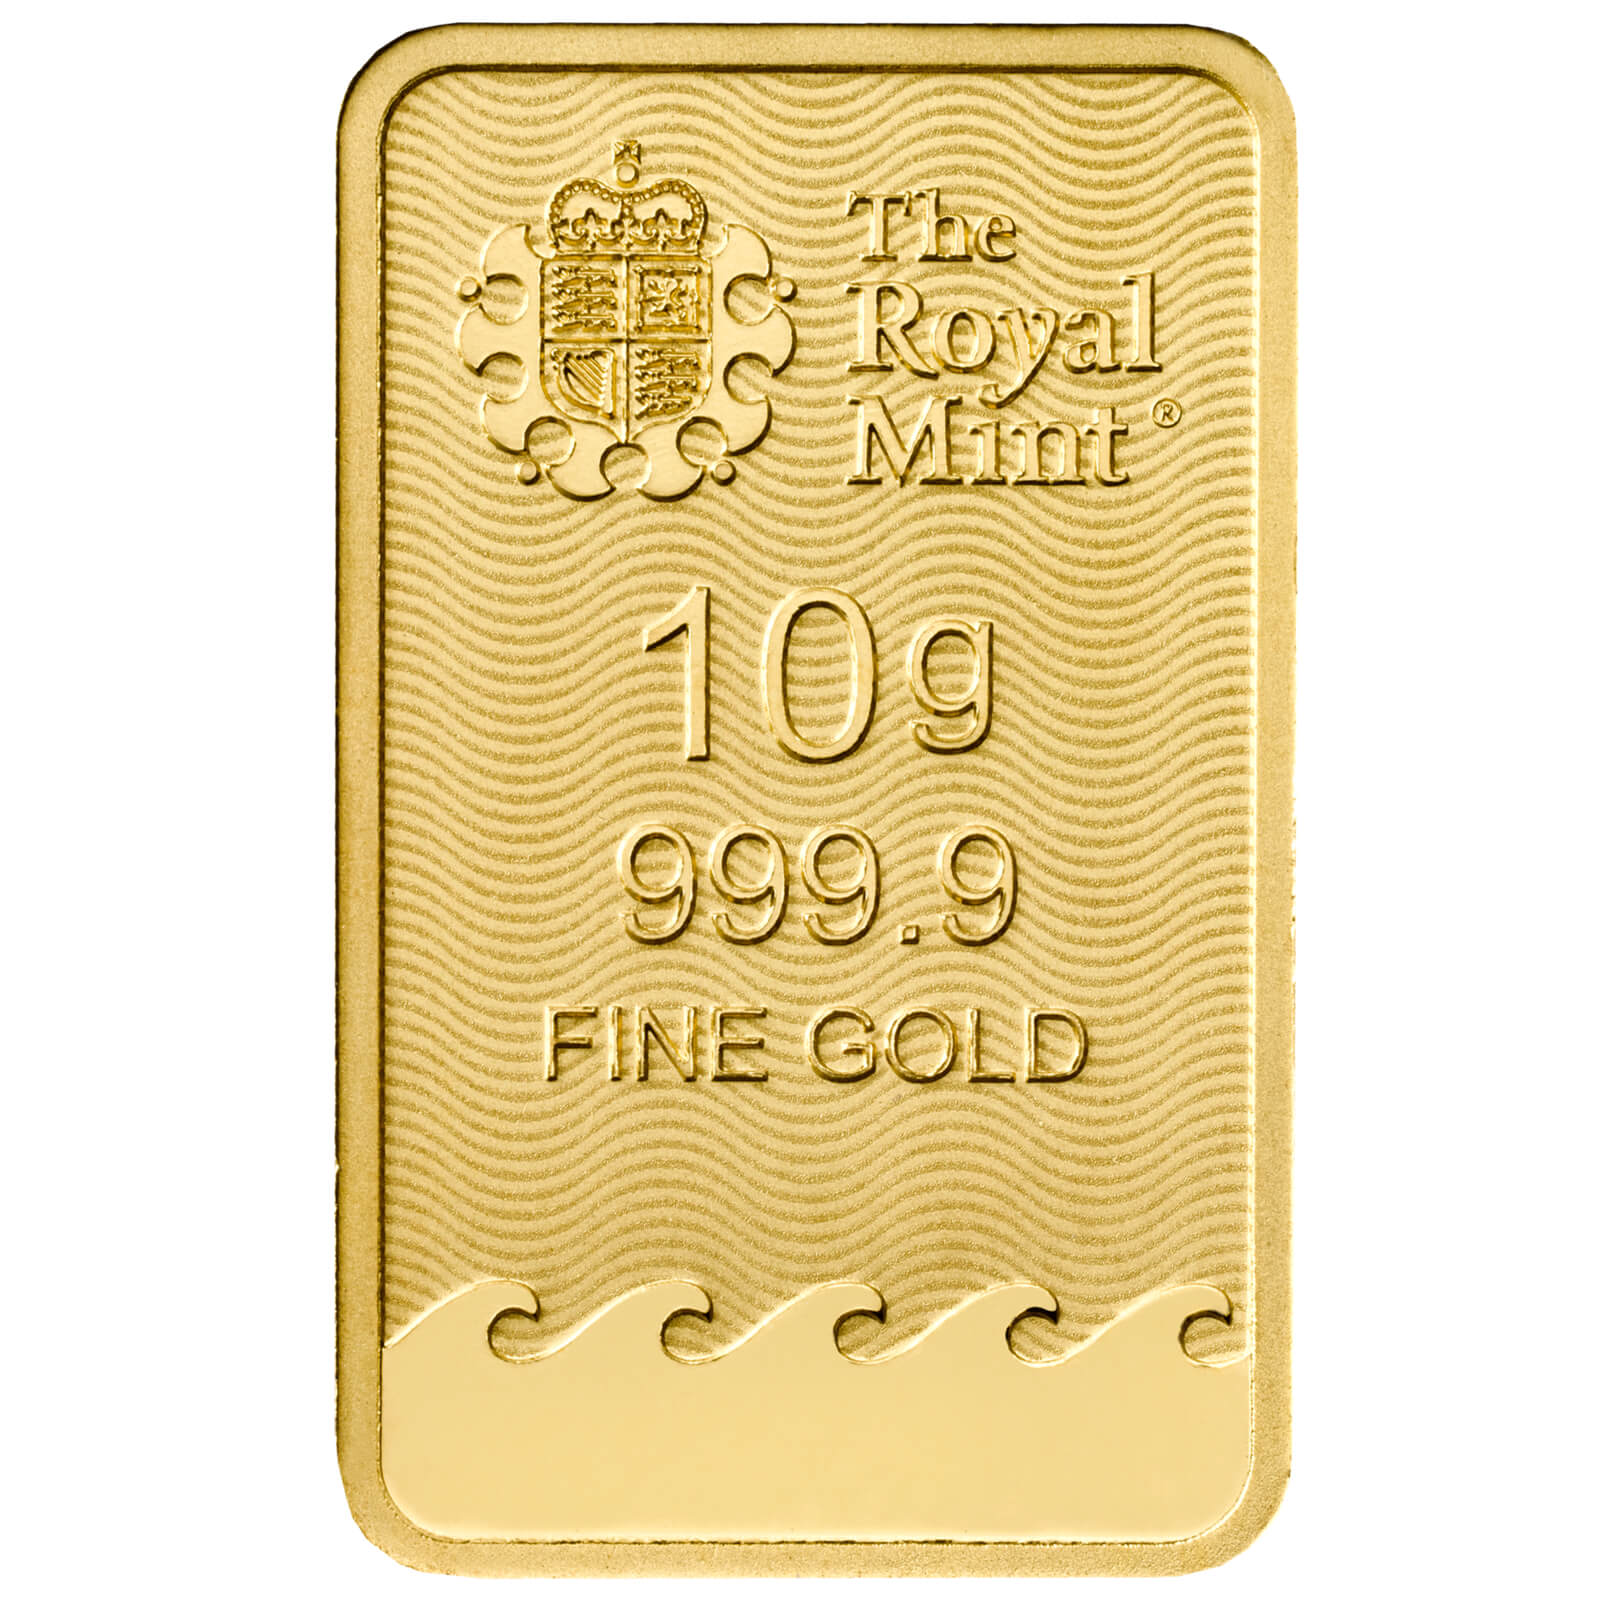 https://www.royalmint.com/globalassets/bullion/images/products/britannia/brit-bars/britannia-bar-minted-gold-side-2-10g-rmr20850.jpg